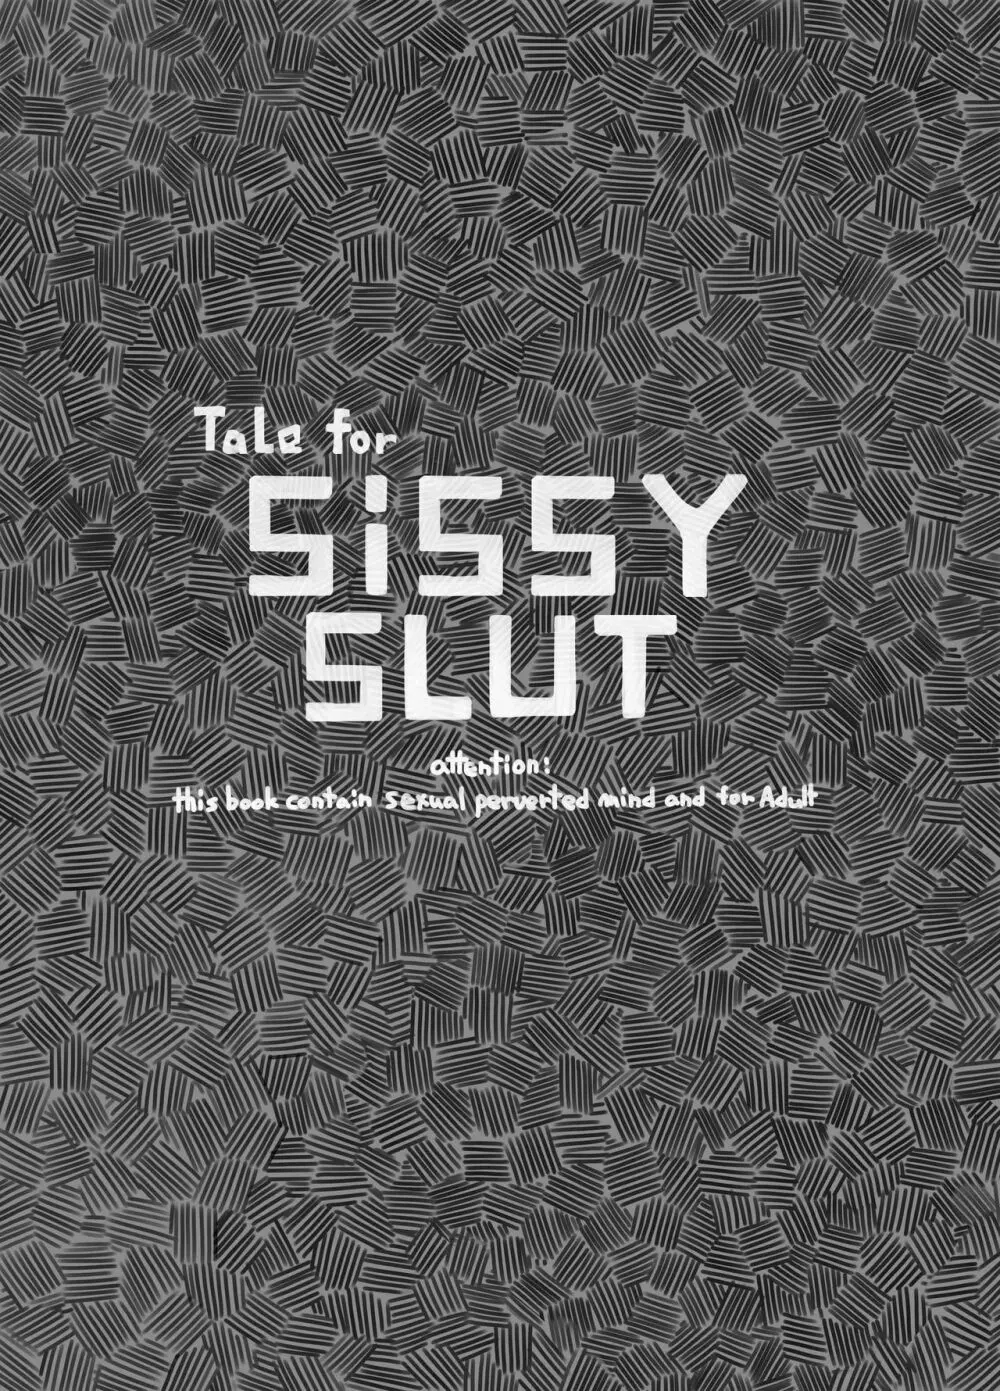 Tale for SiSSY SLUT